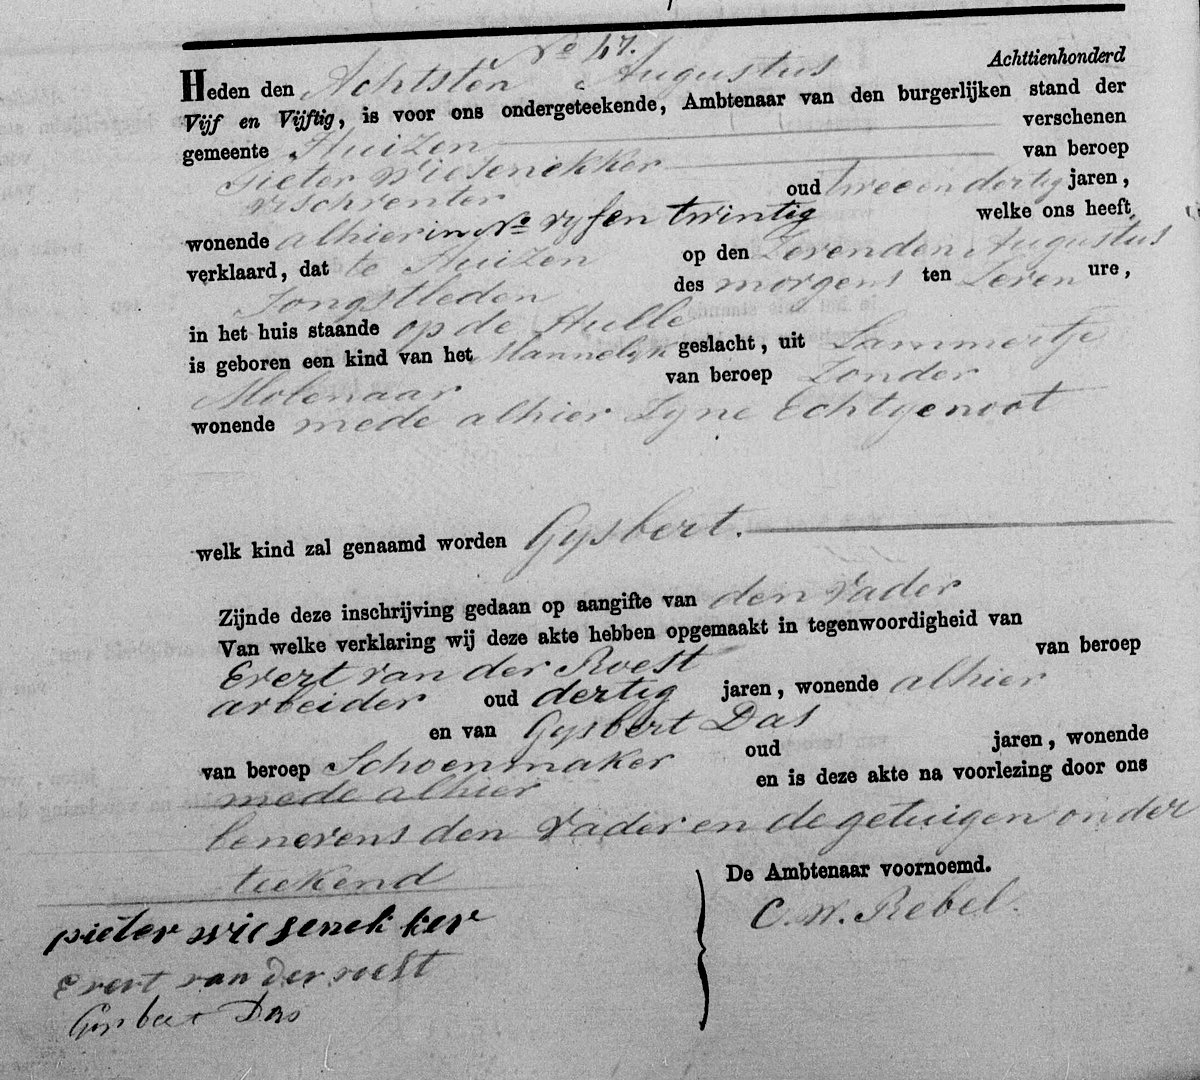 Birth certificate of Gijsbert Wiesenekker